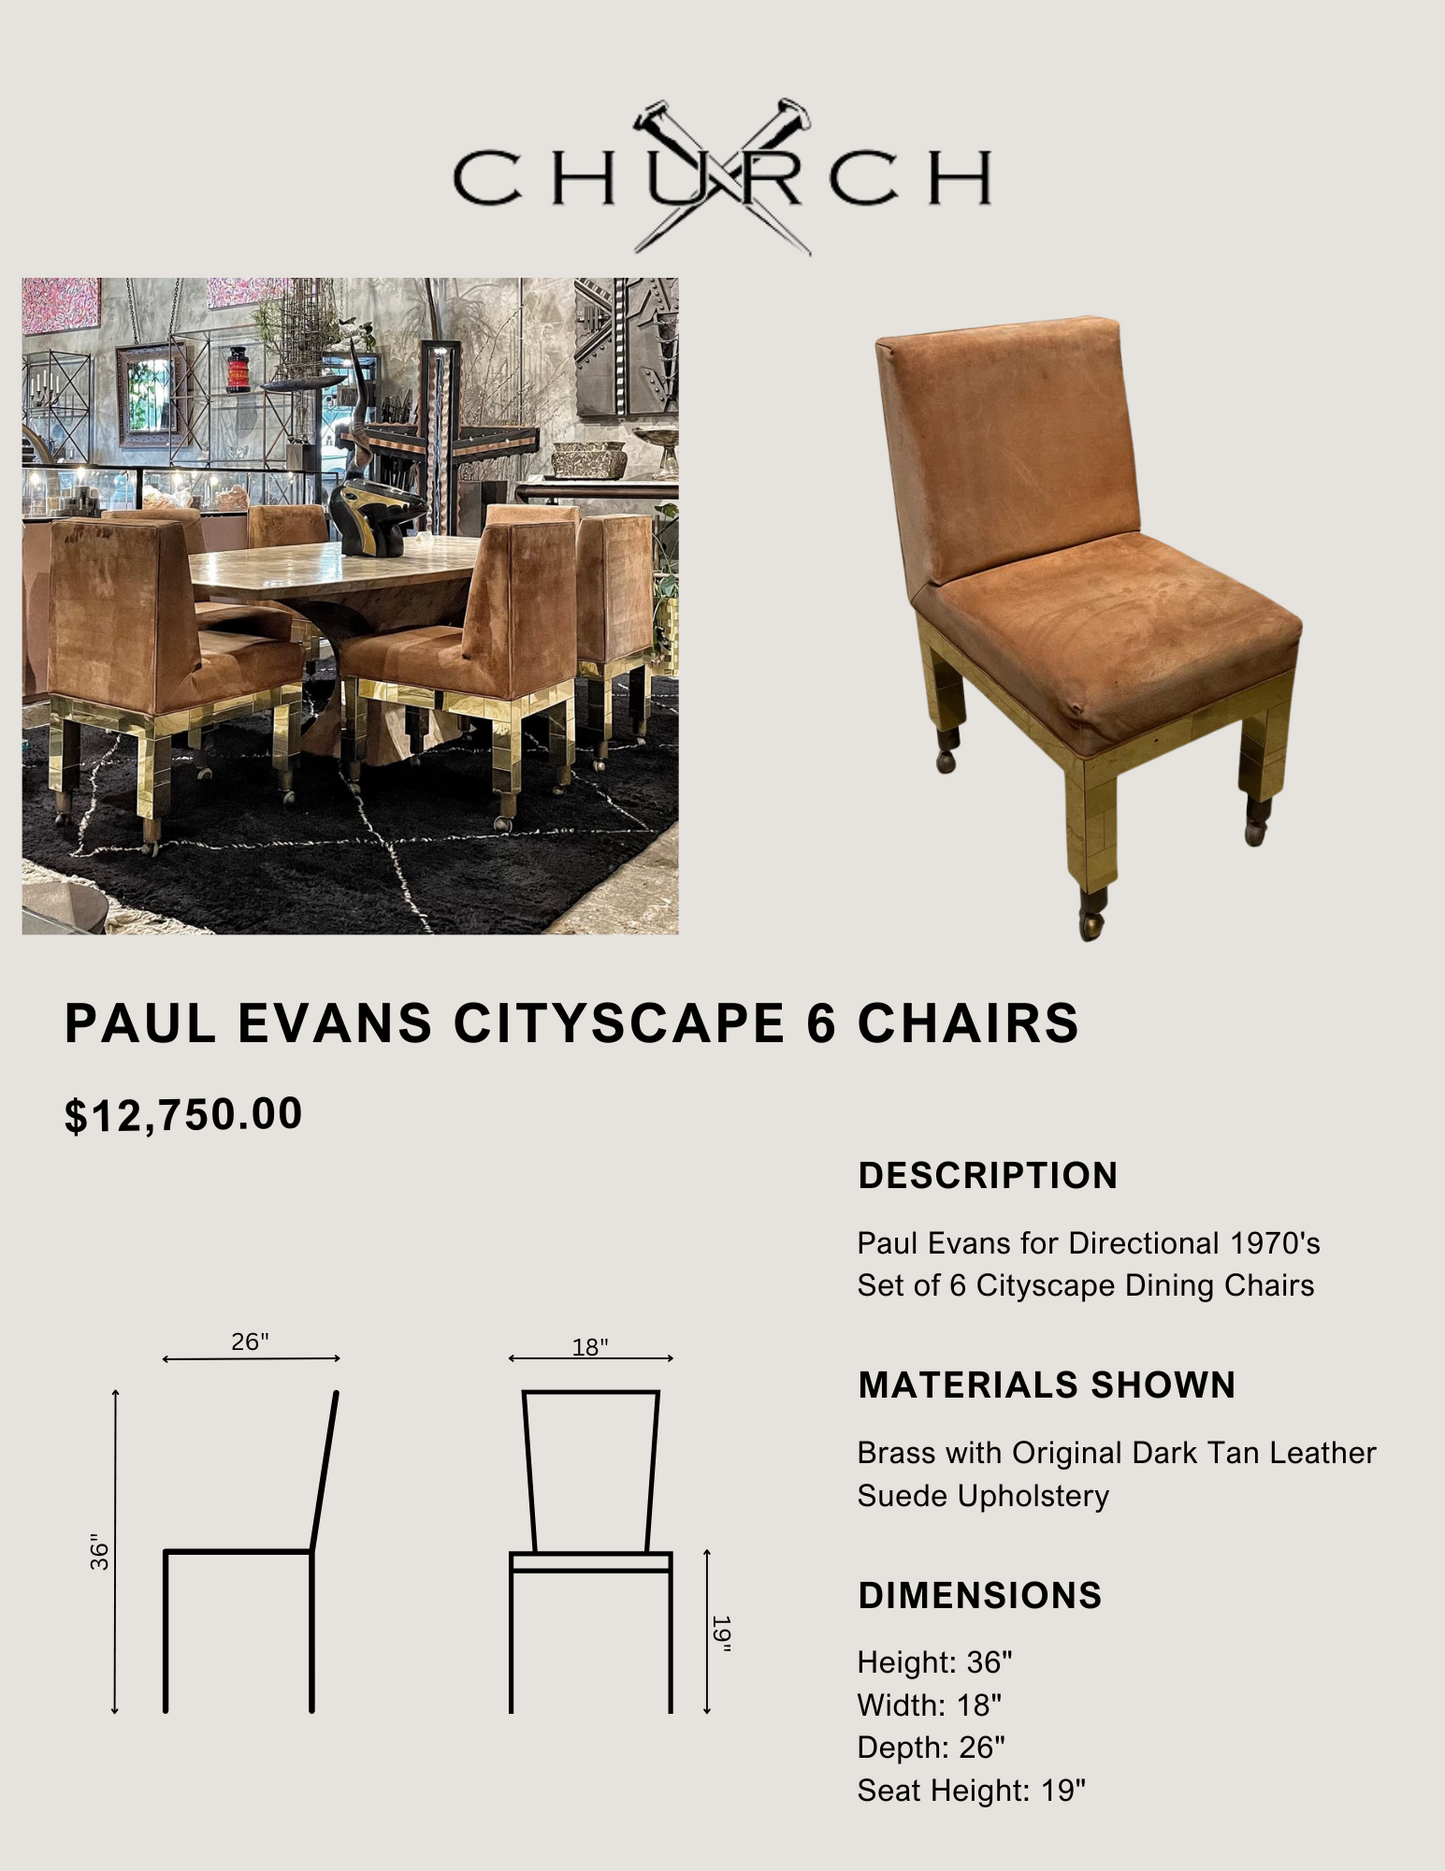 Paul Evans Cityscape 6 Chairs